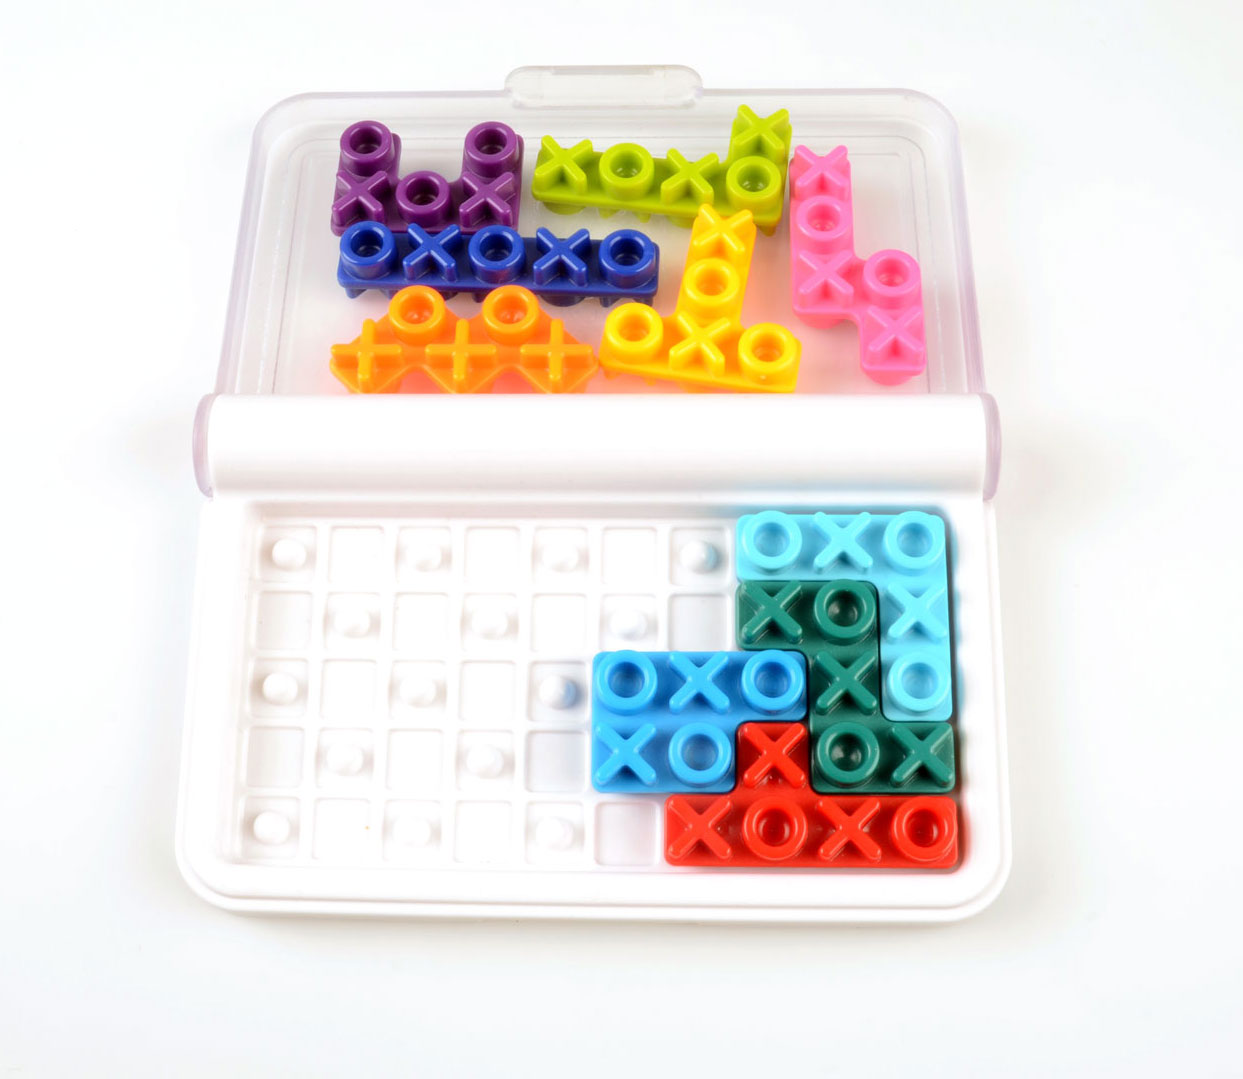 IQ XOXO - Kids Logic Game - Kids Puzzles